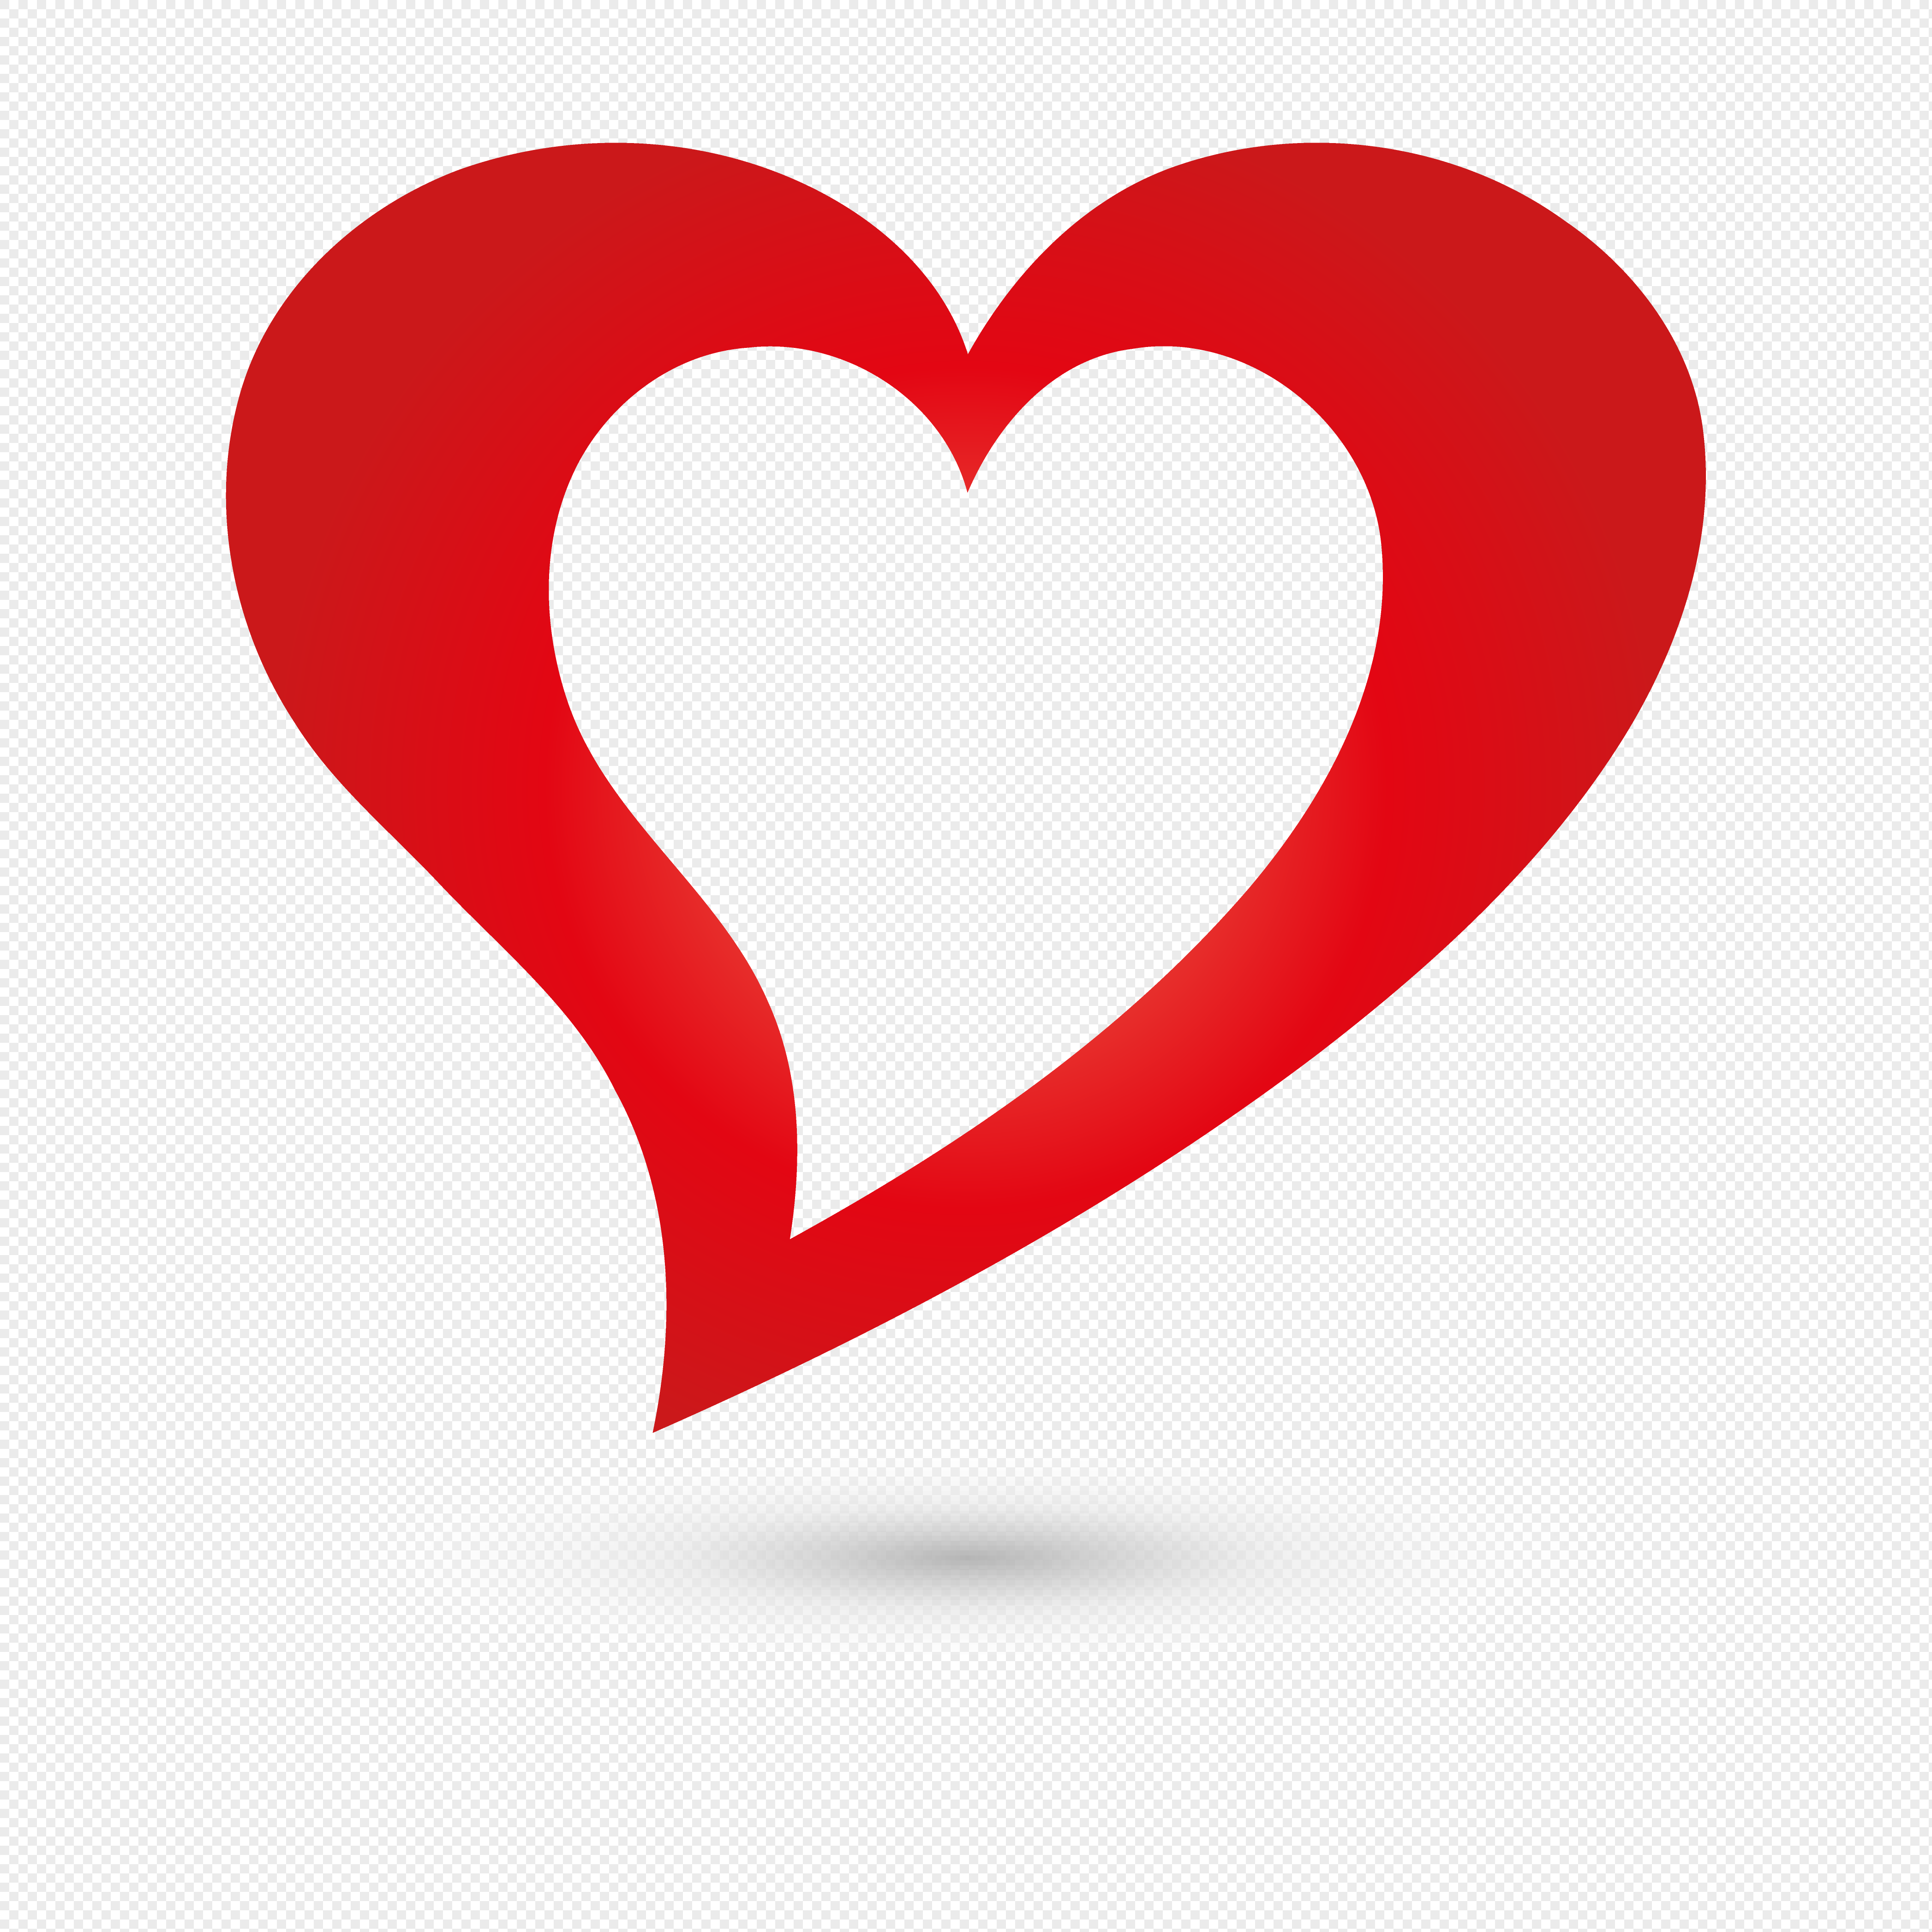 download free heart vector illustrator